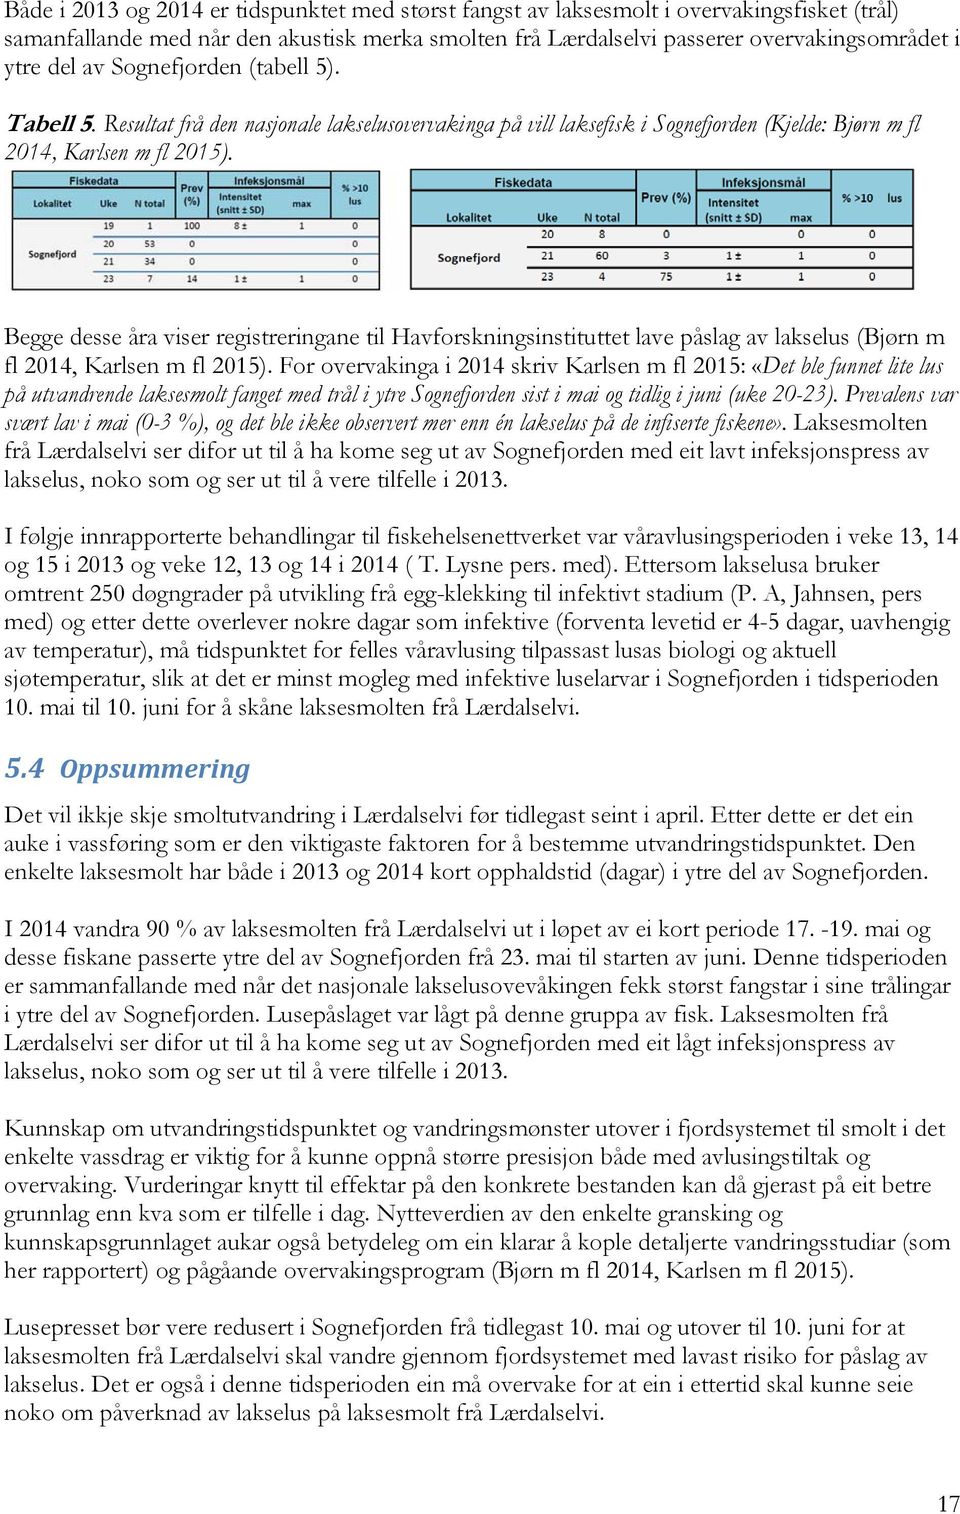 Begge desse åra viser registreringane til Havforskningsinstituttet lave påslag av lakselus (Bjørn m fl 2014, Karlsen m fl 2015).